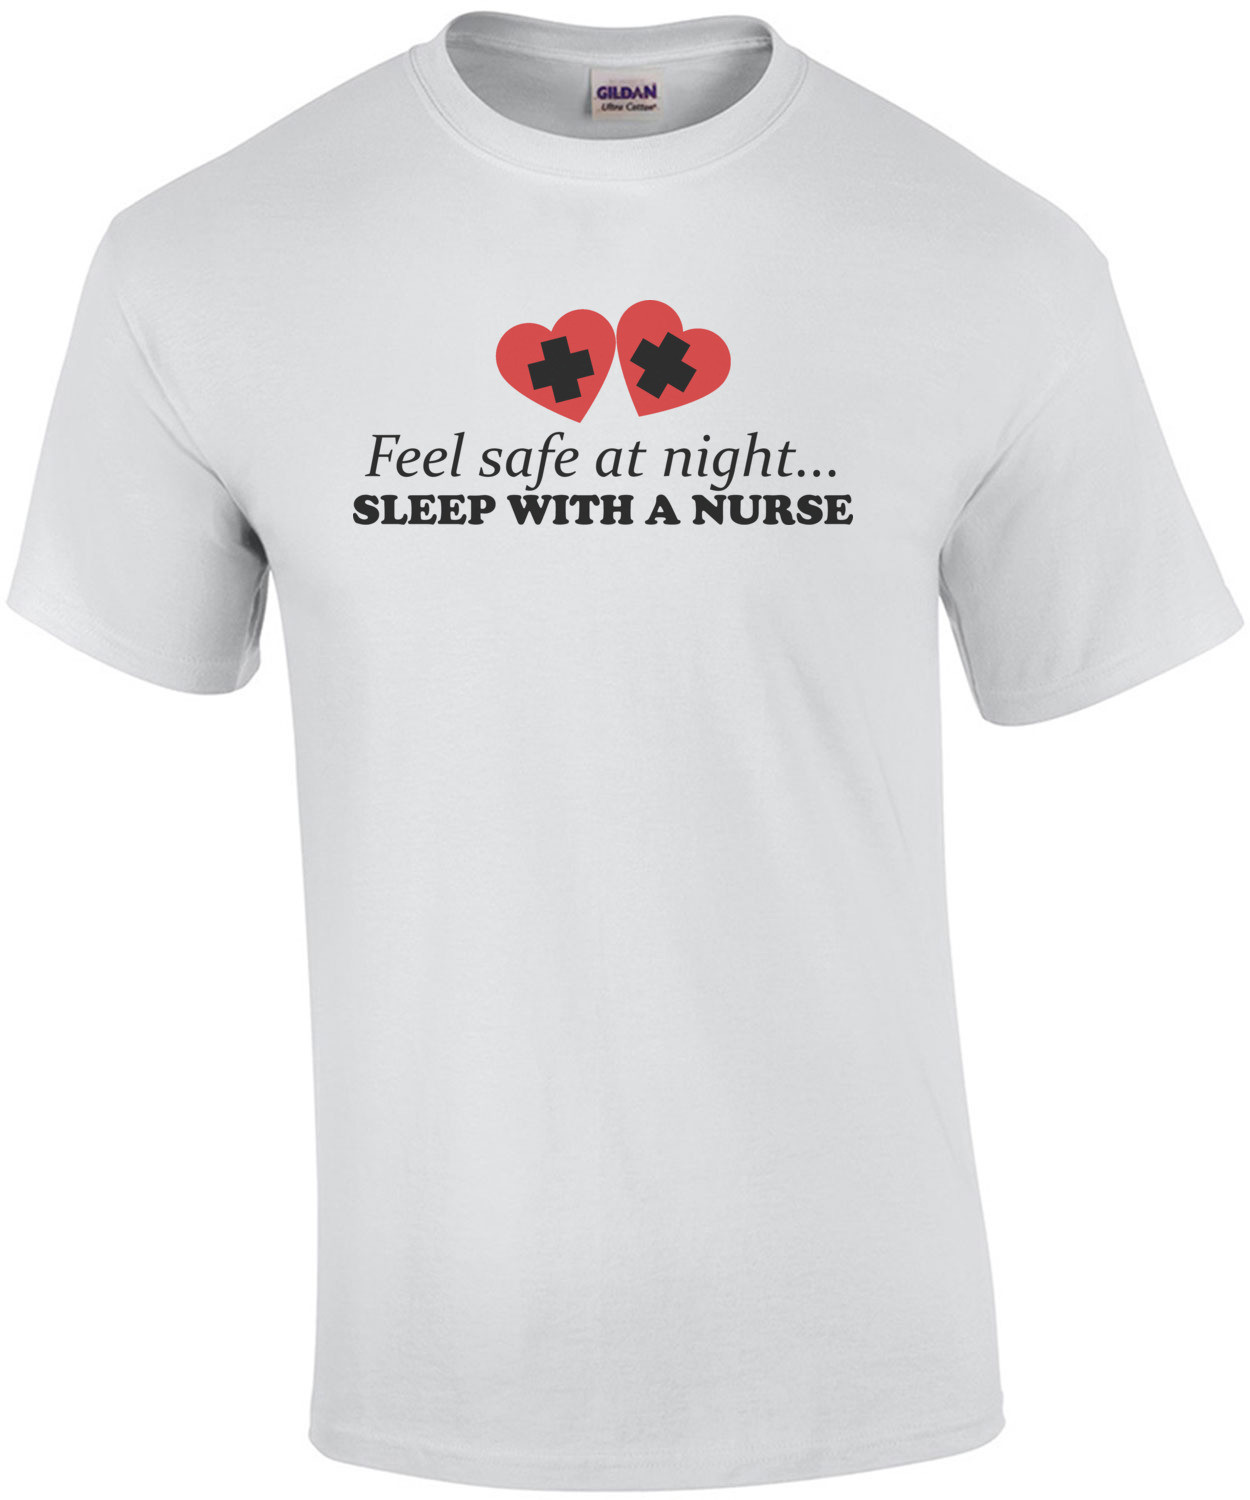 Feel safe at night... sleep with a nurse t-shirt